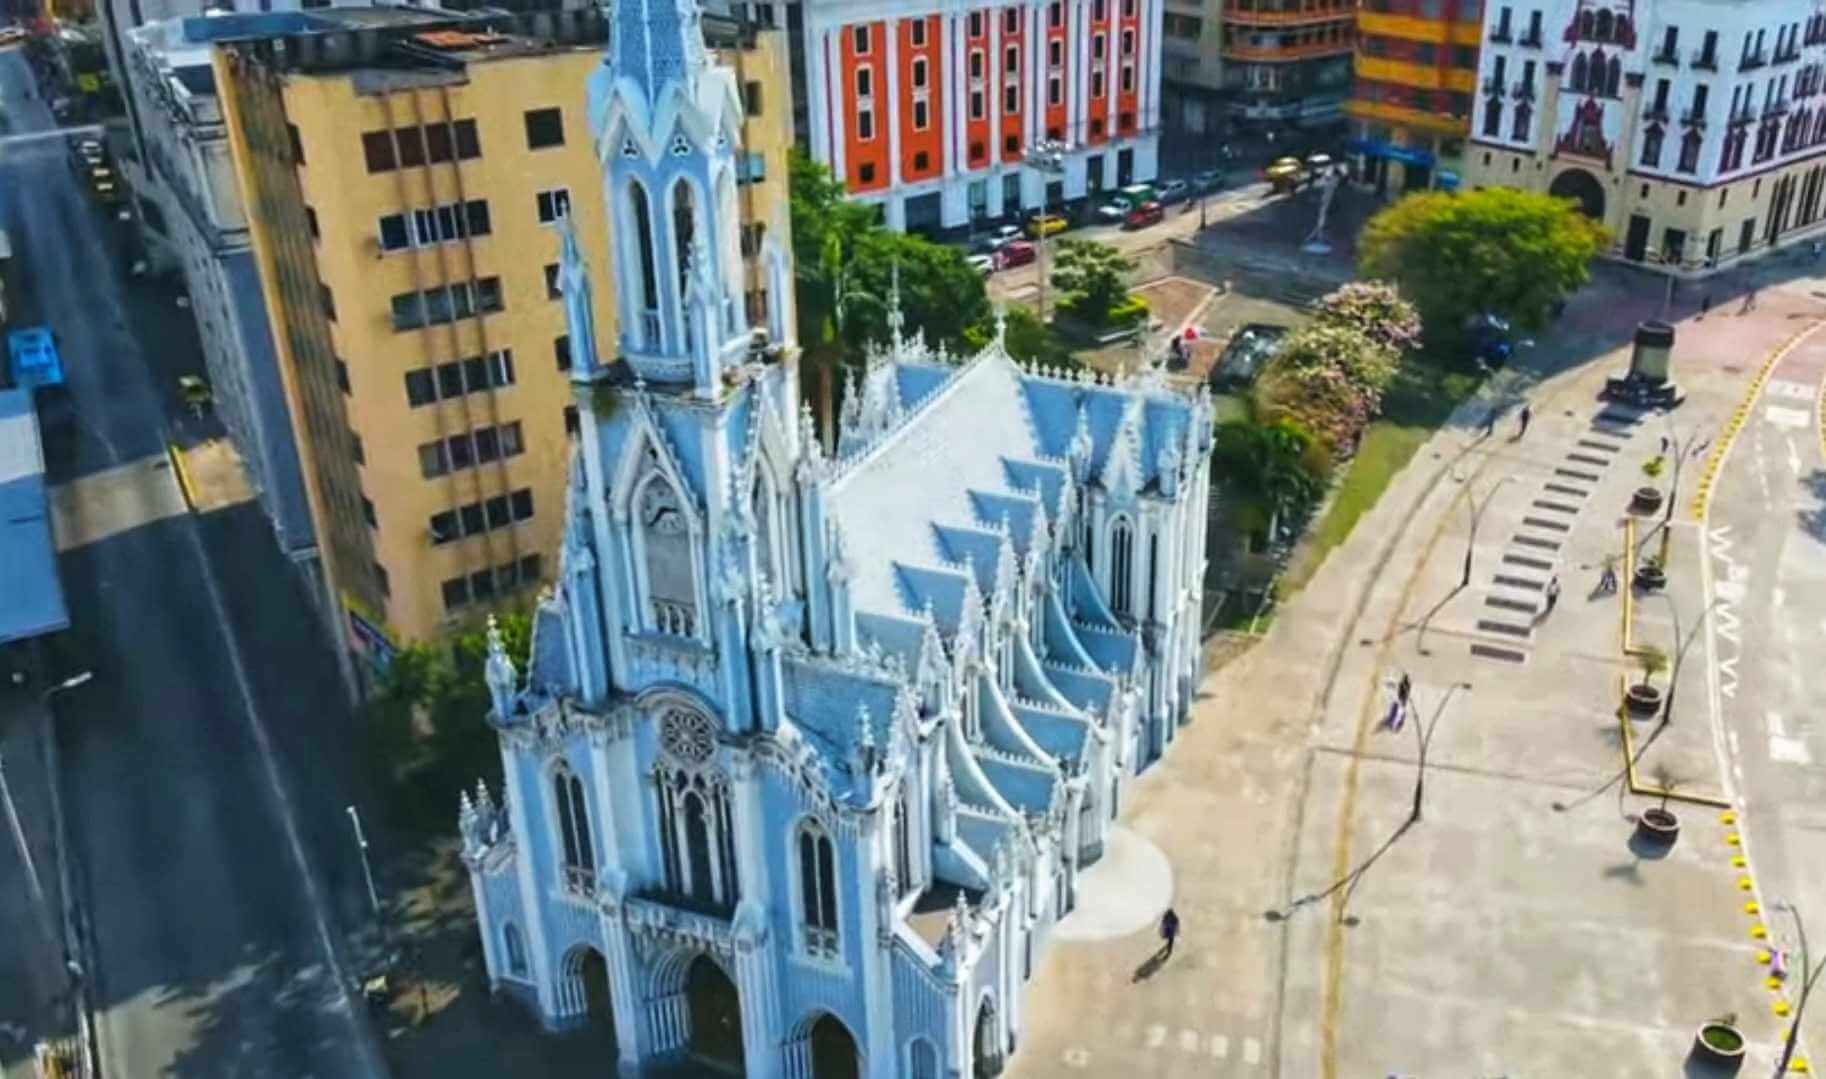 Church in Cali Colombia